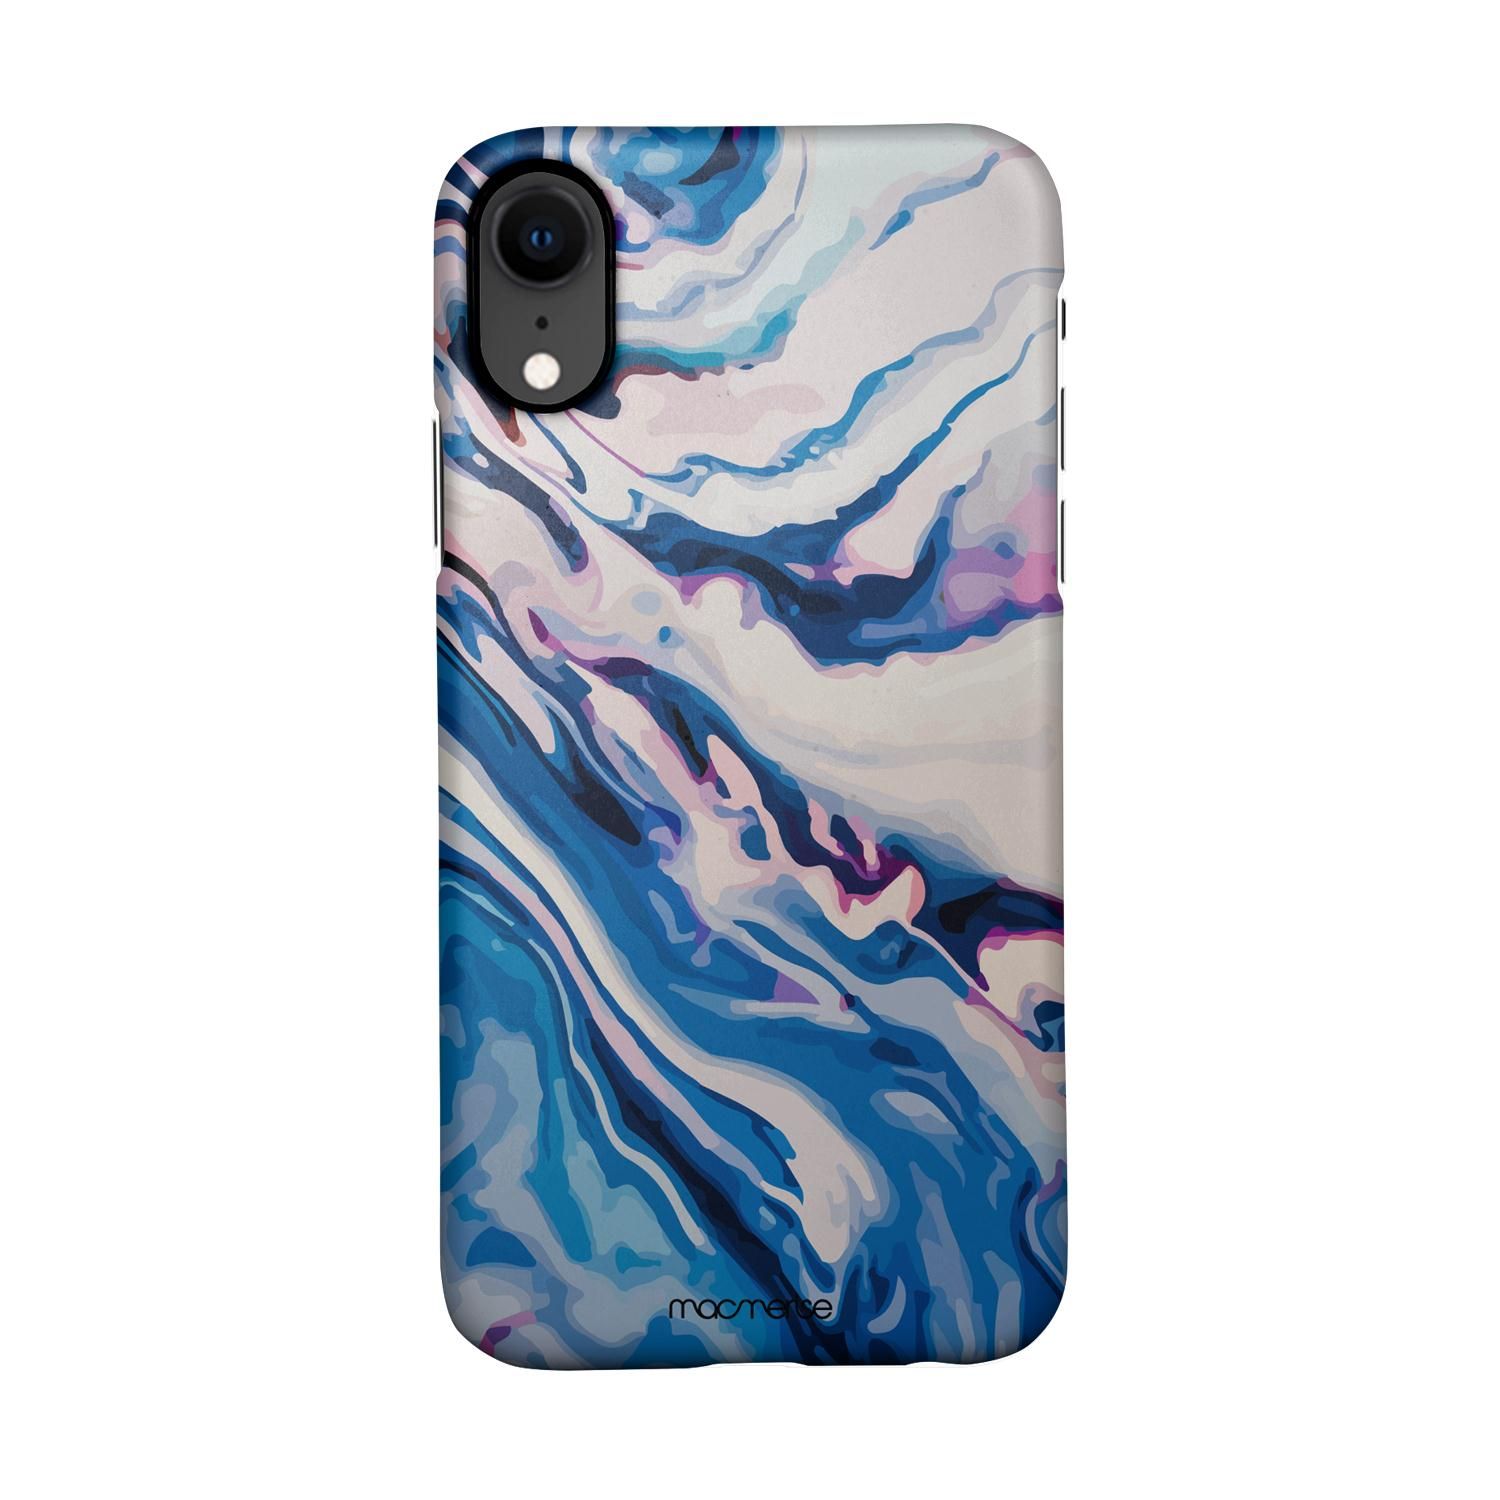 Buy Liquid Funk Pinkblue - Sleek Phone Case for iPhone XR Online